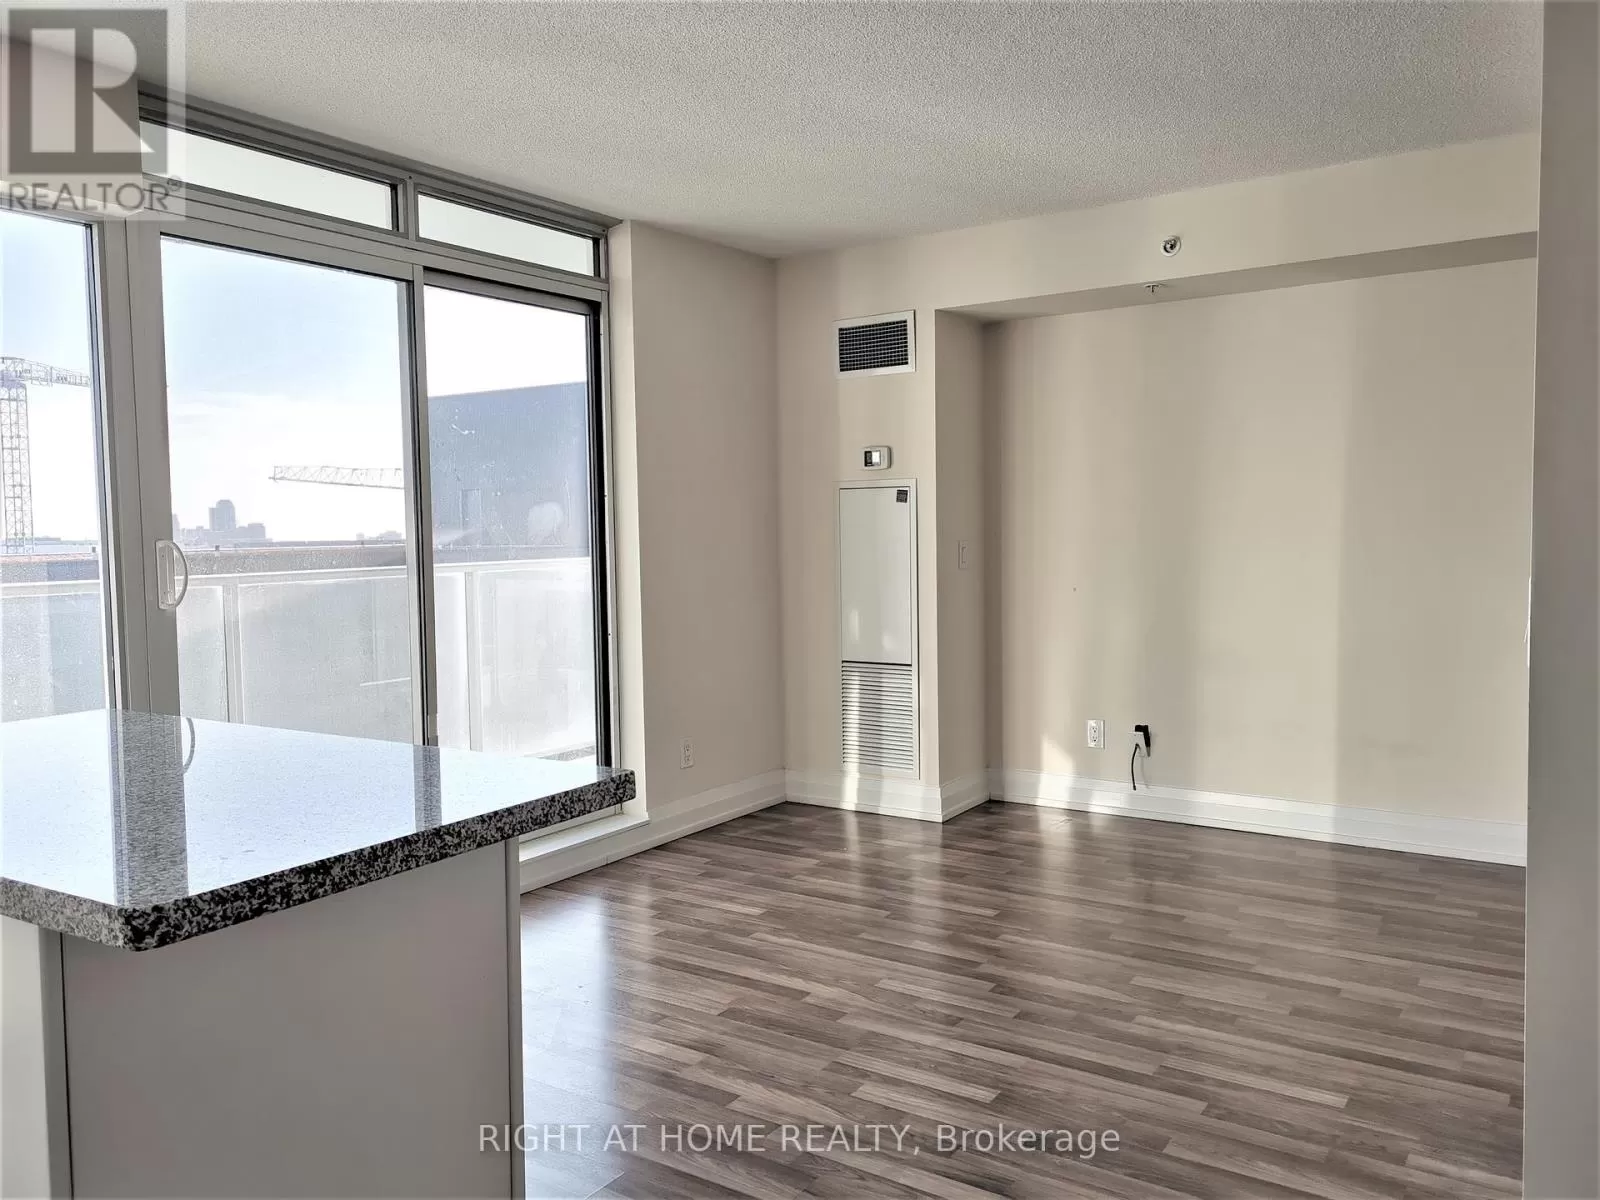 Apartment for rent: E908 - 555 Wilson Avenue, Toronto, Ontario M3H 0C5